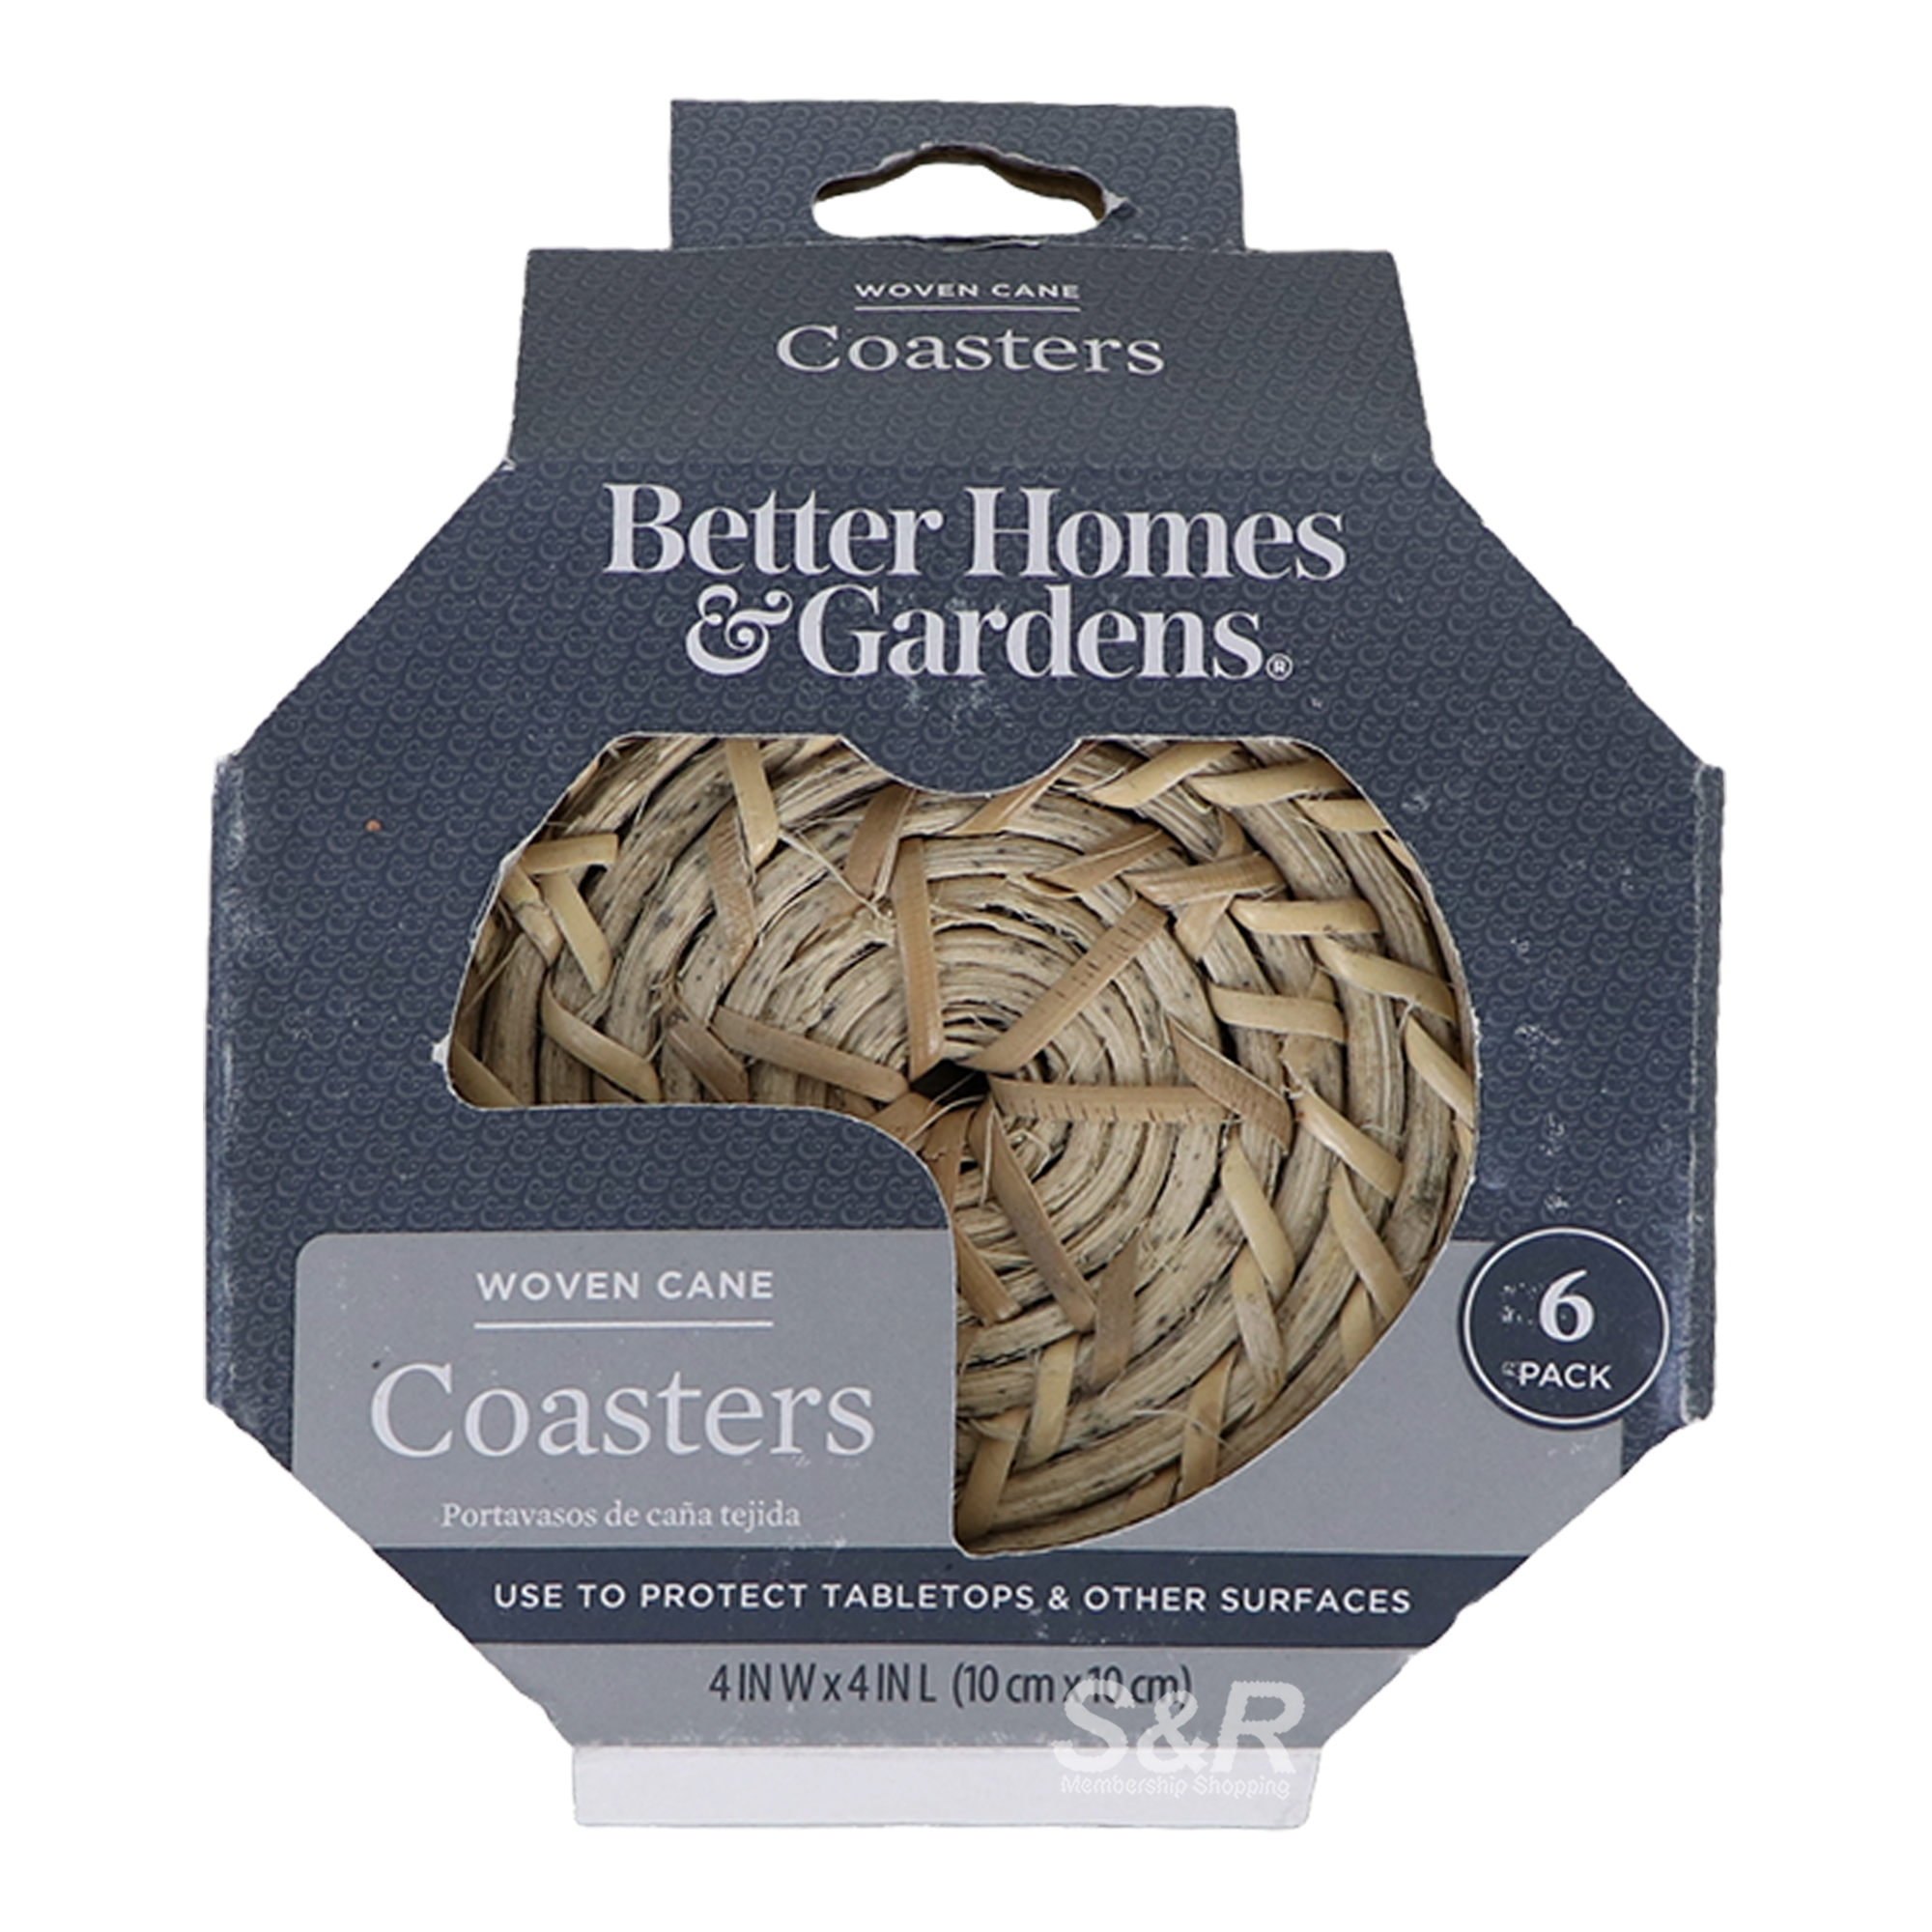 Better Homes & Gardens Woven Cane Coaster 6pcs